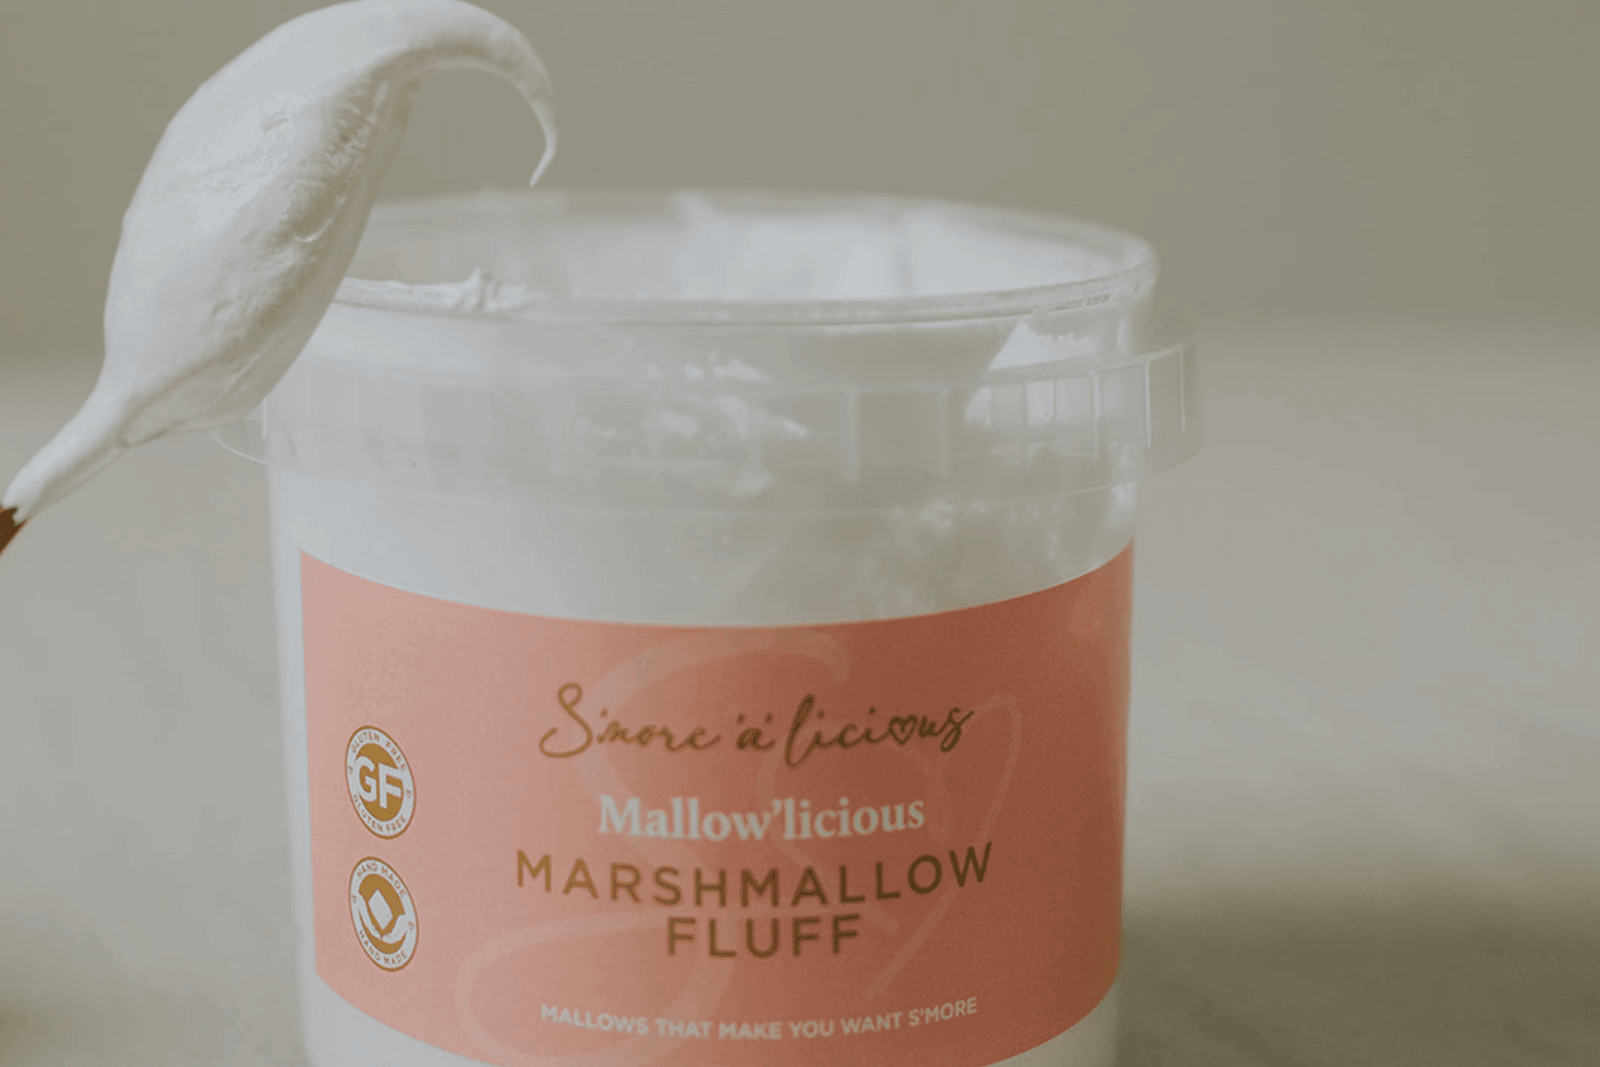 Handmade Marshmallow Fluff - S’more’a’licious -<code> smorealicious.com </code>Handmade gifts and treats made in Northern Ireland